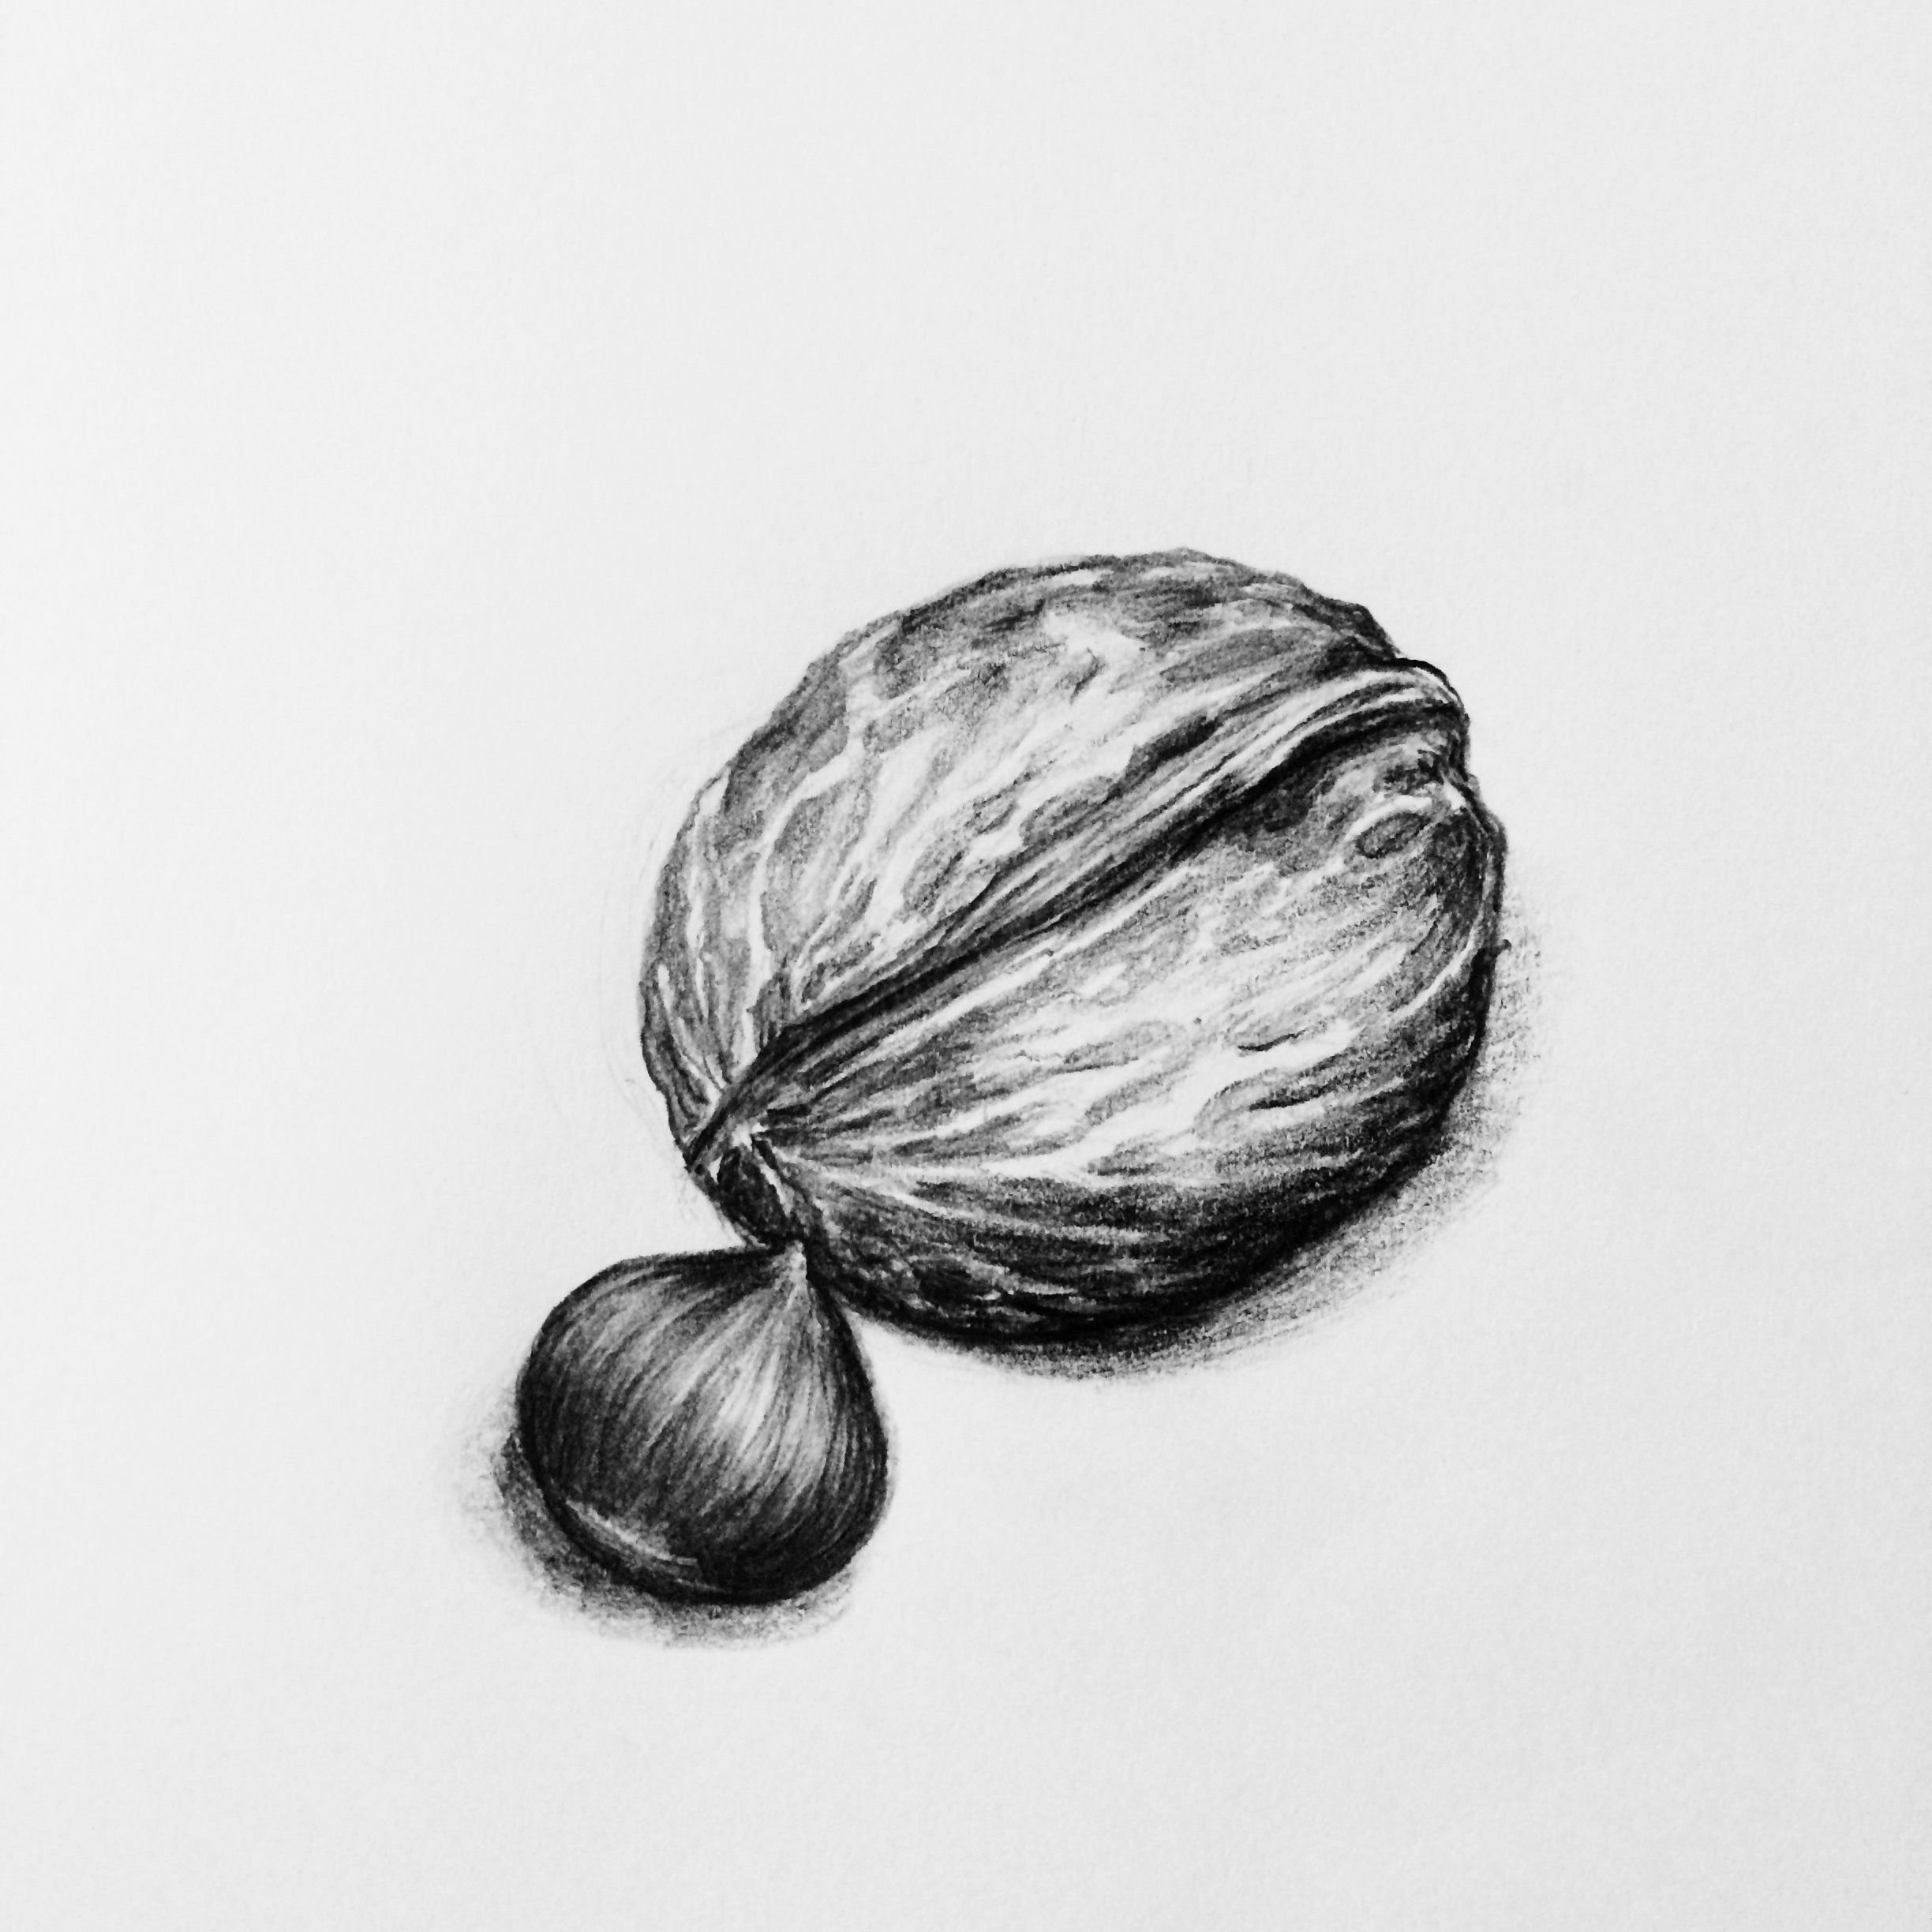 How to draw walnuts step by step